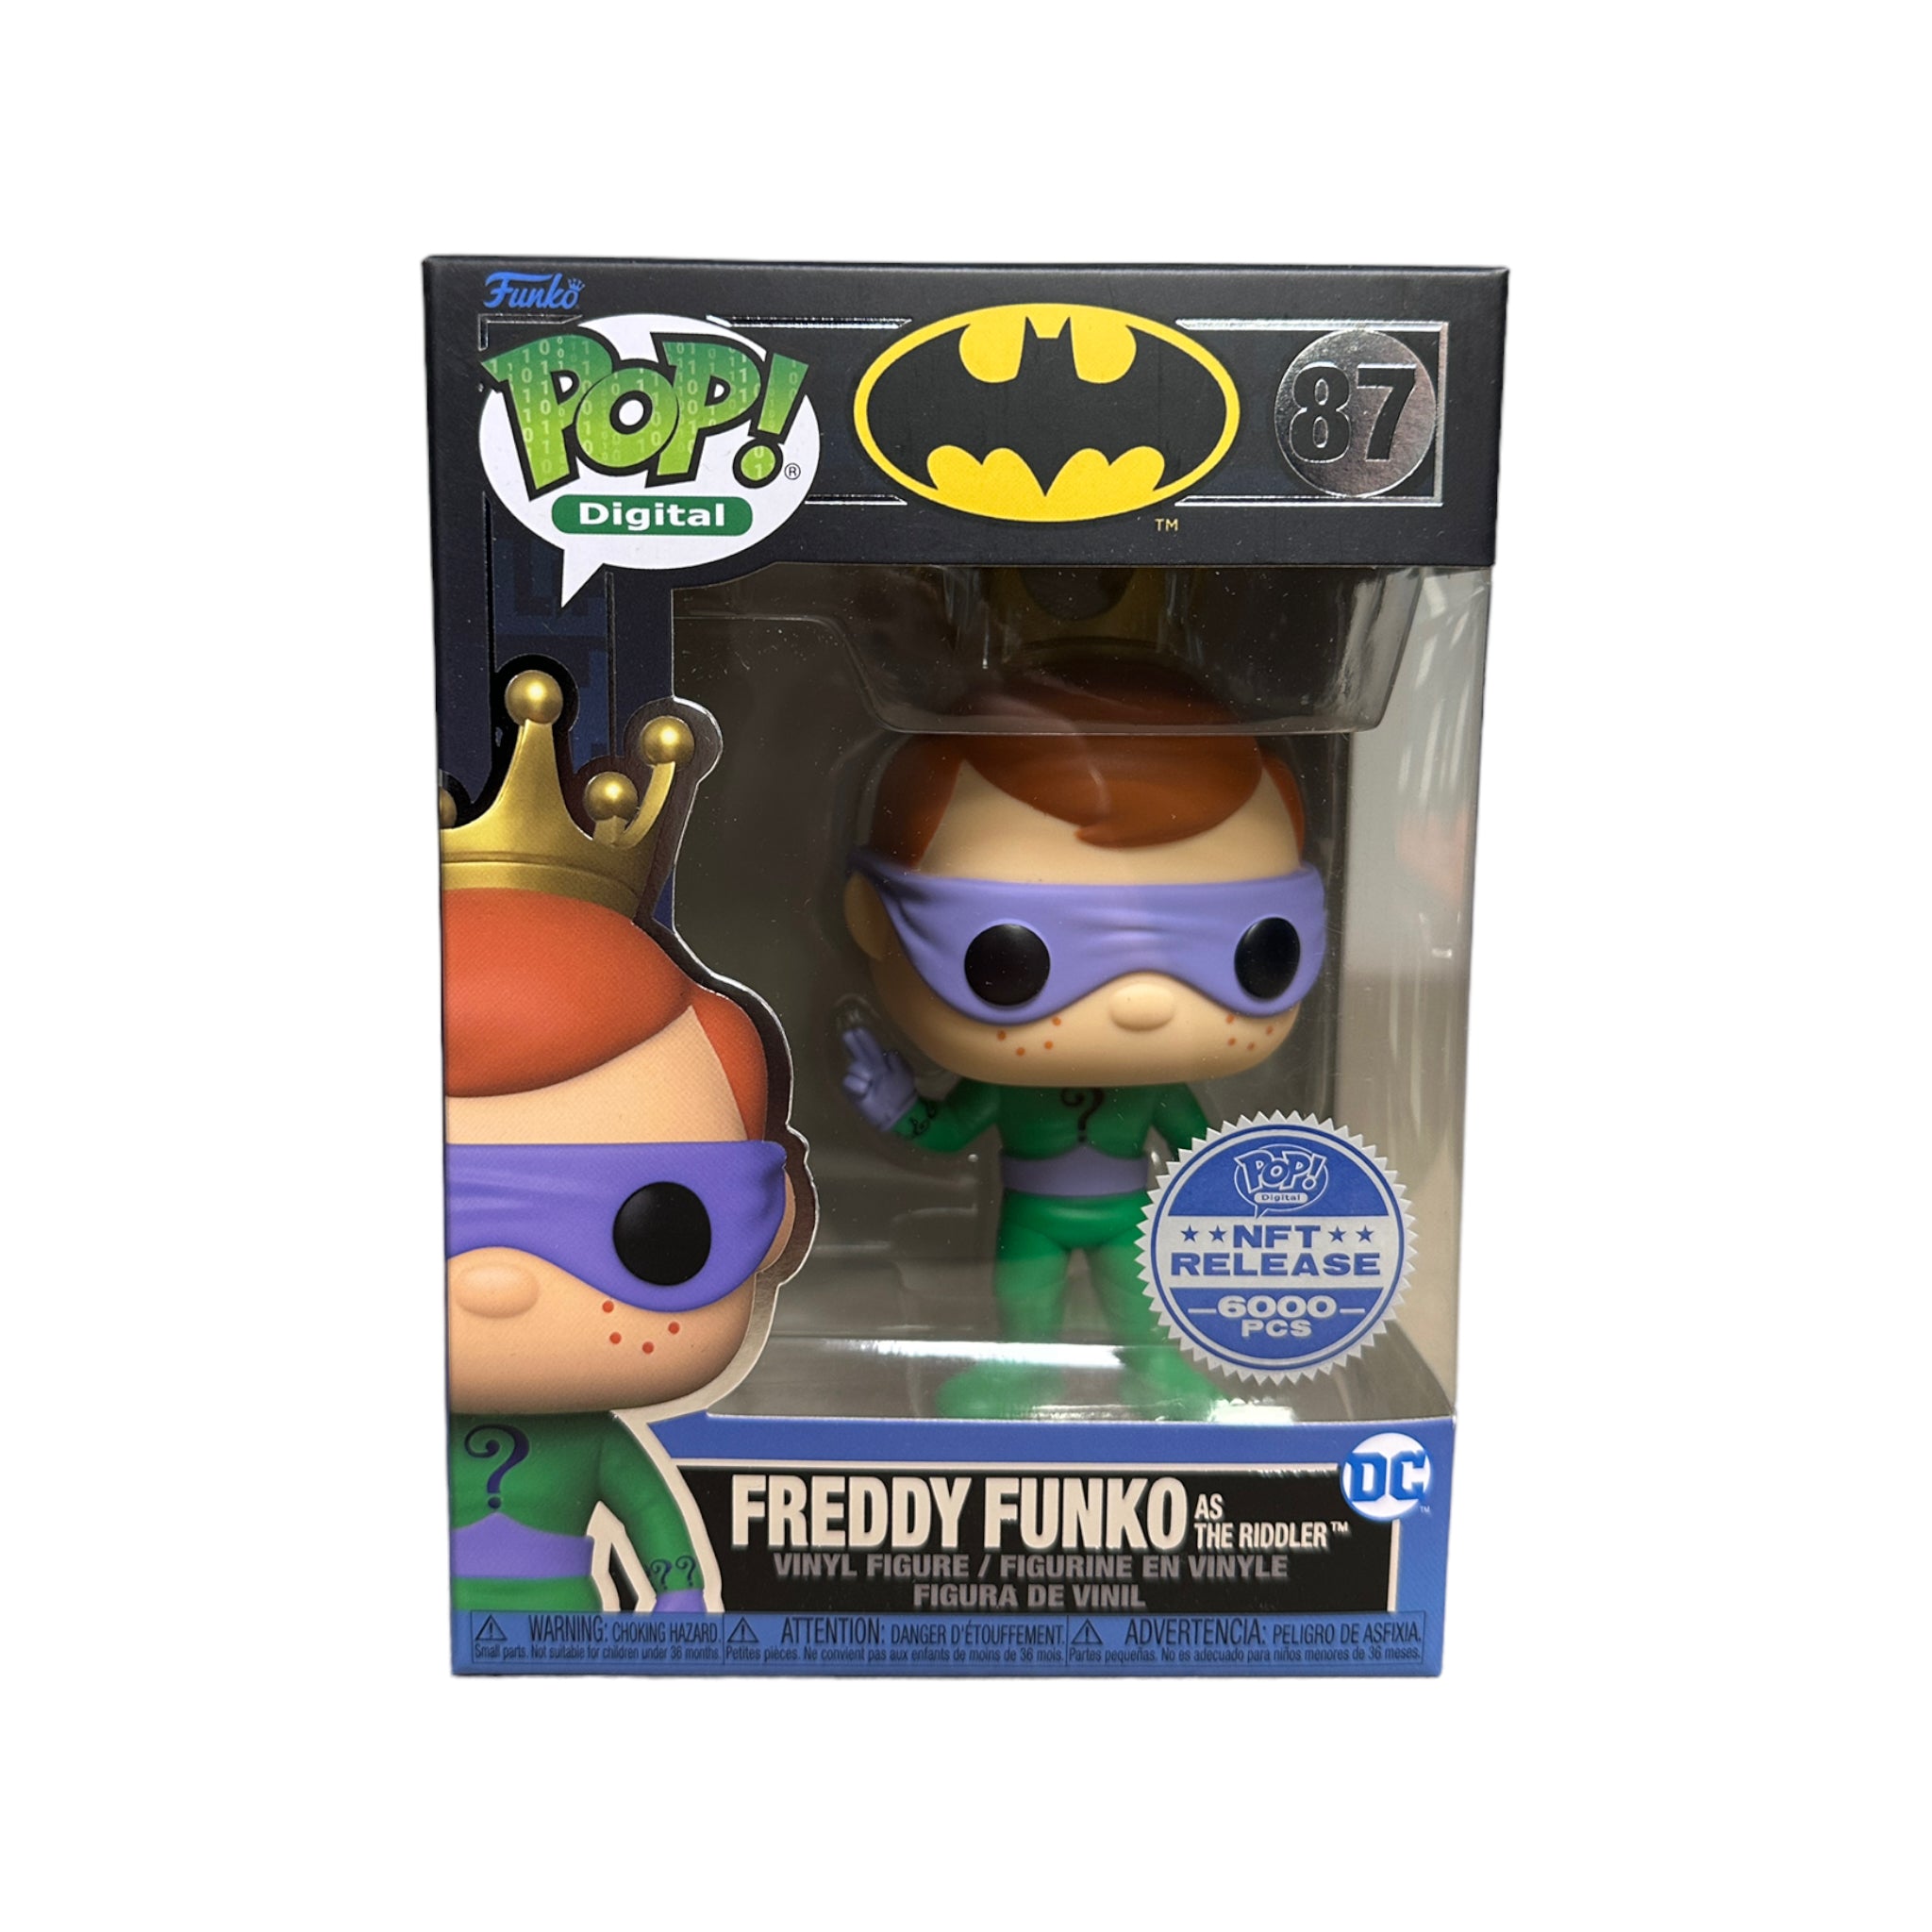 Freddy Funko as The Riddler #87 Funko Pop! - Batman - NFT Release Exclusive LE6000 Pcs - Condition 9.5/10